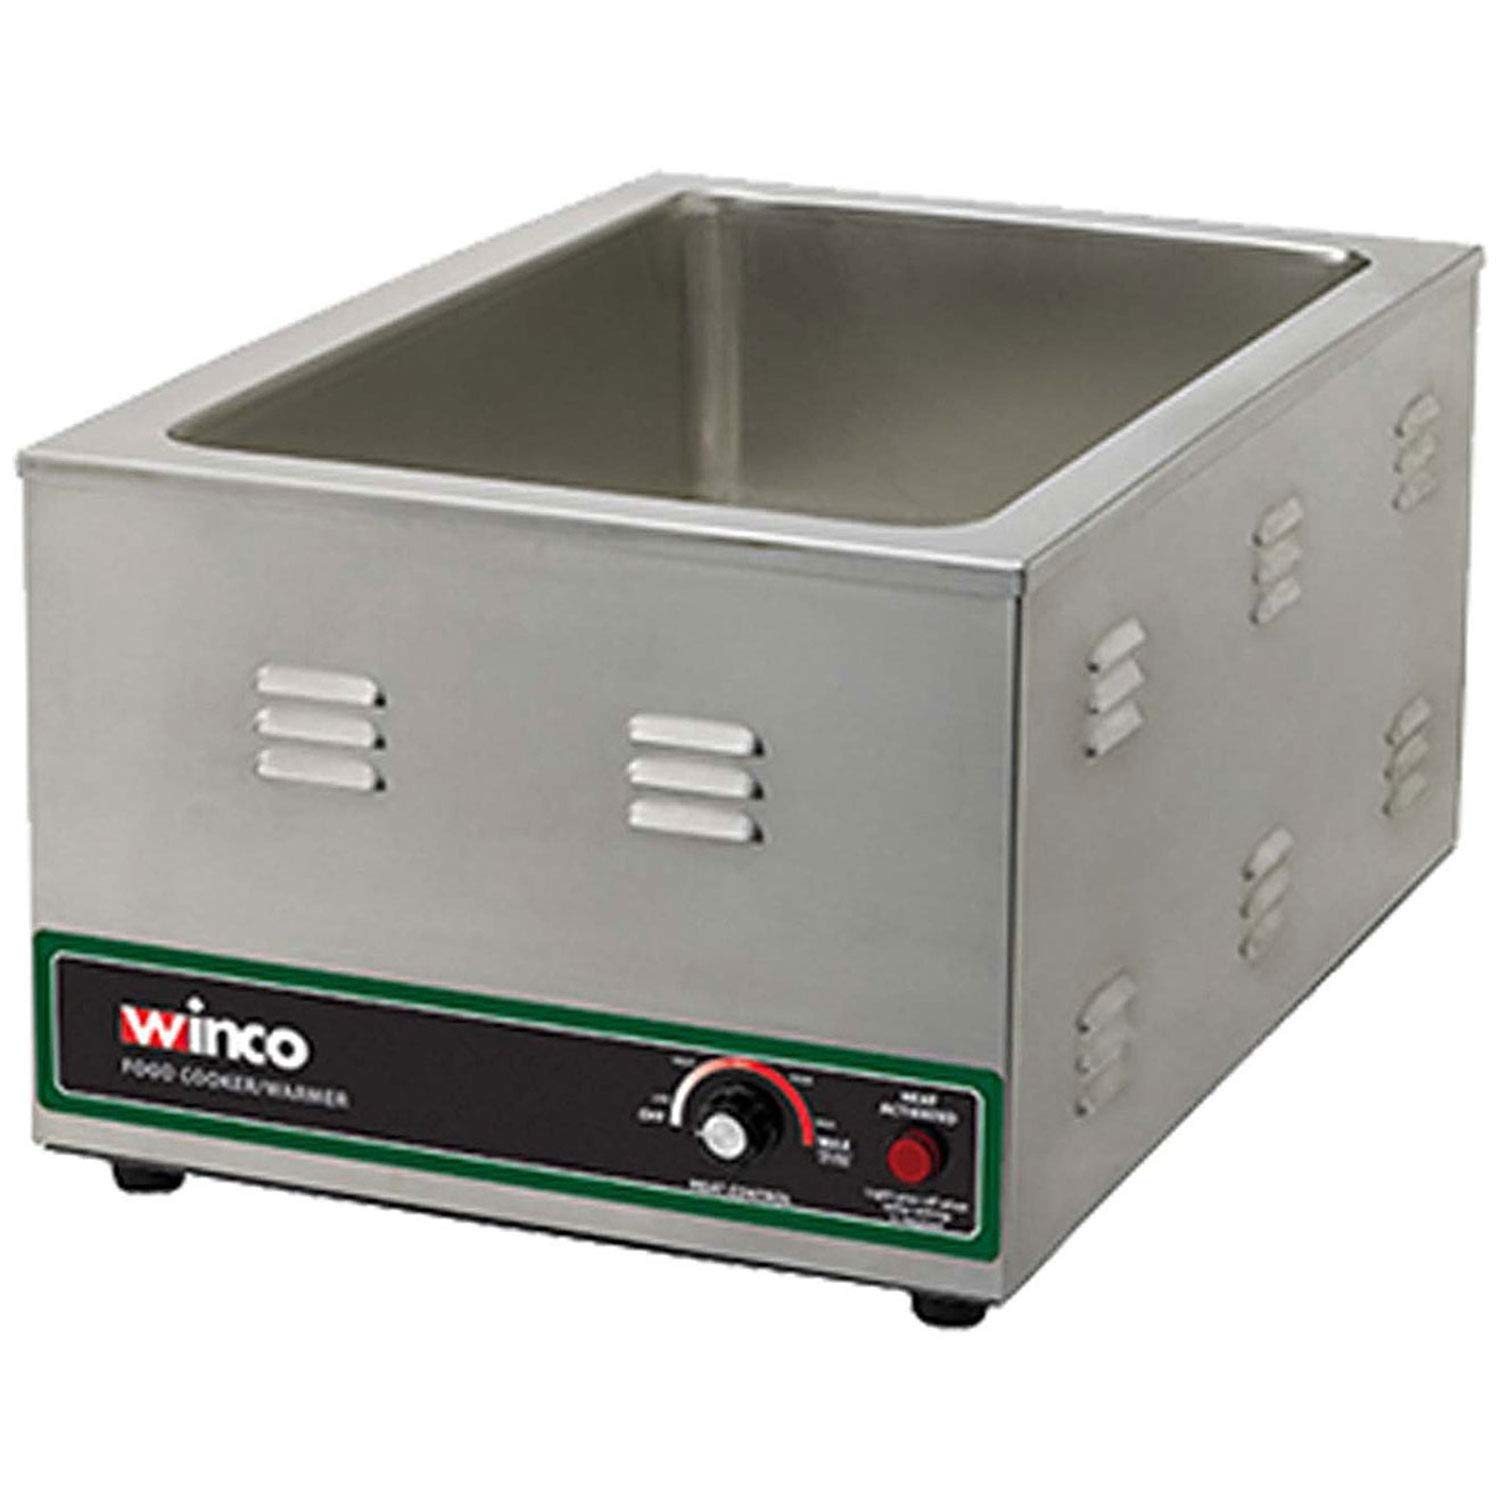 Winco FW-S600 Electric Food Cooker/Warmer, 1500-watt,St...